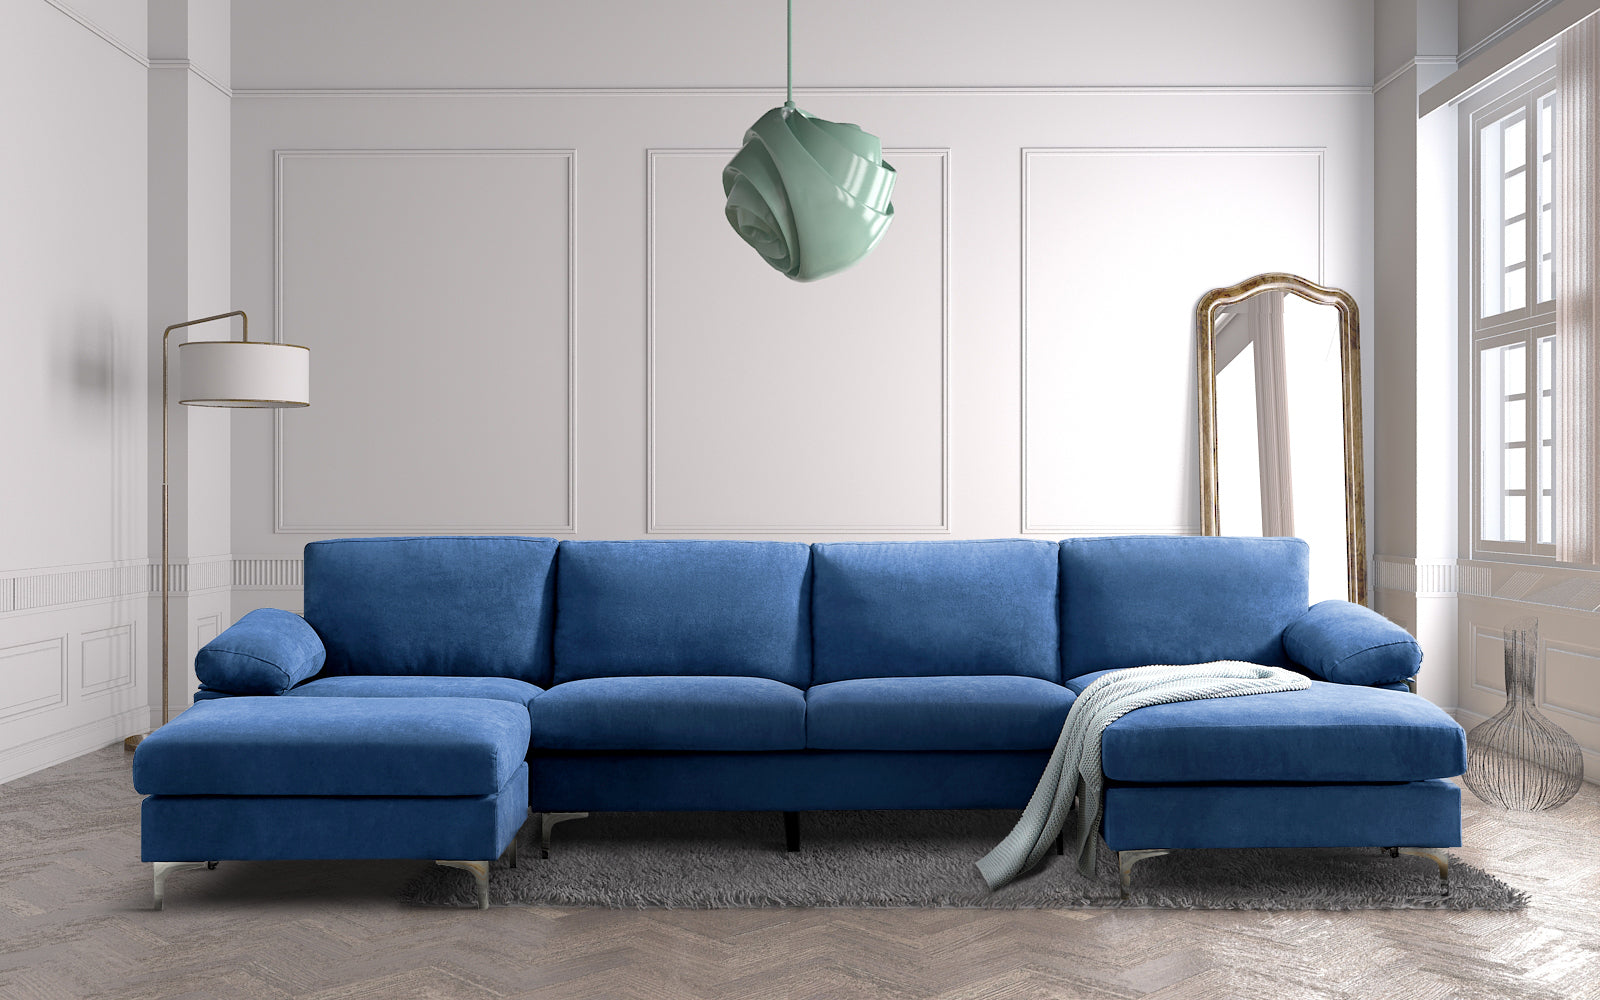 RELAX LOUNGE Convertible Modular Sofa (Blue)